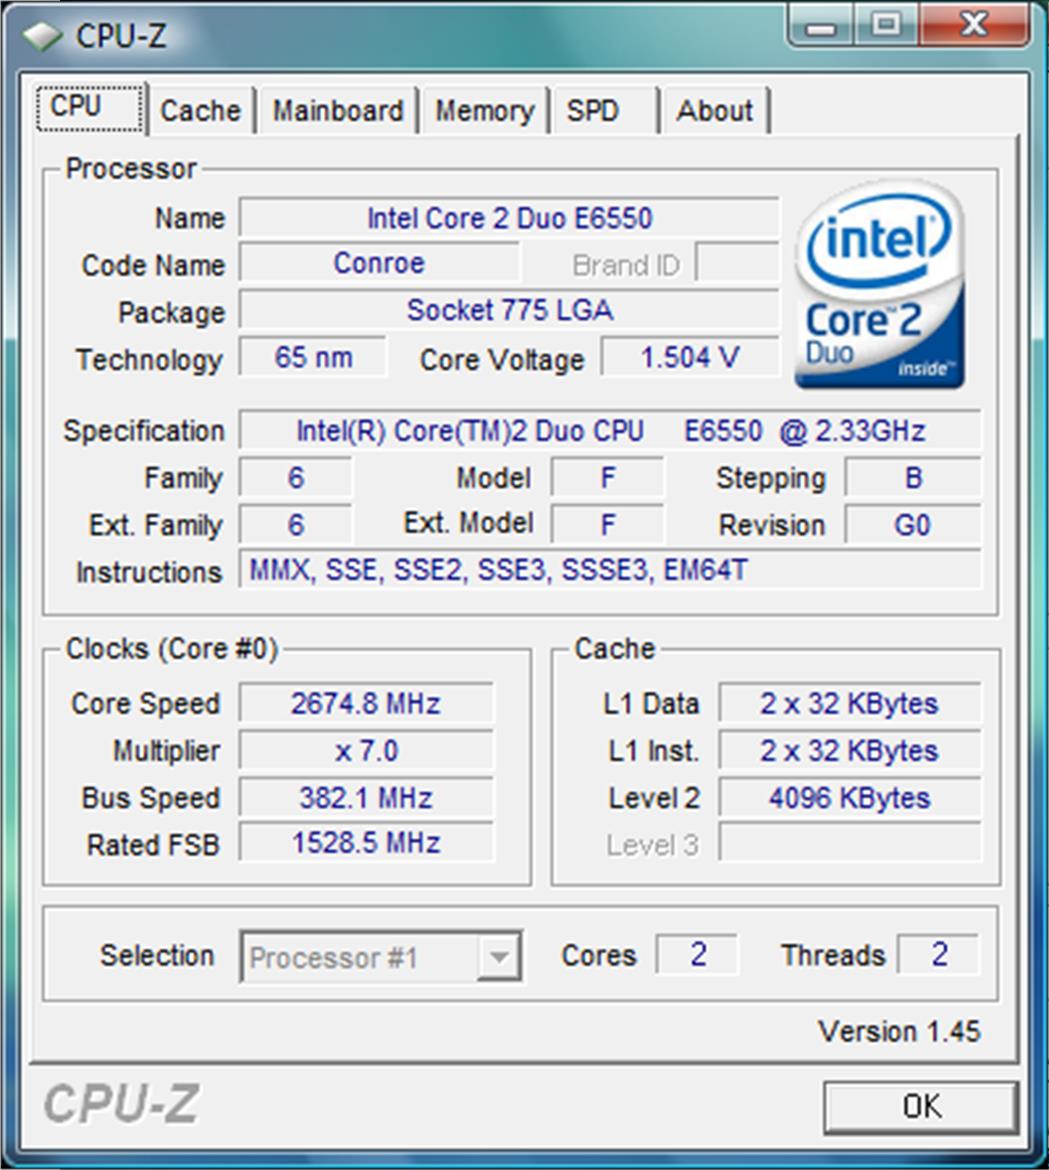 Intel X48 Motherboard Round-up: ASUS, ECS, & Intel